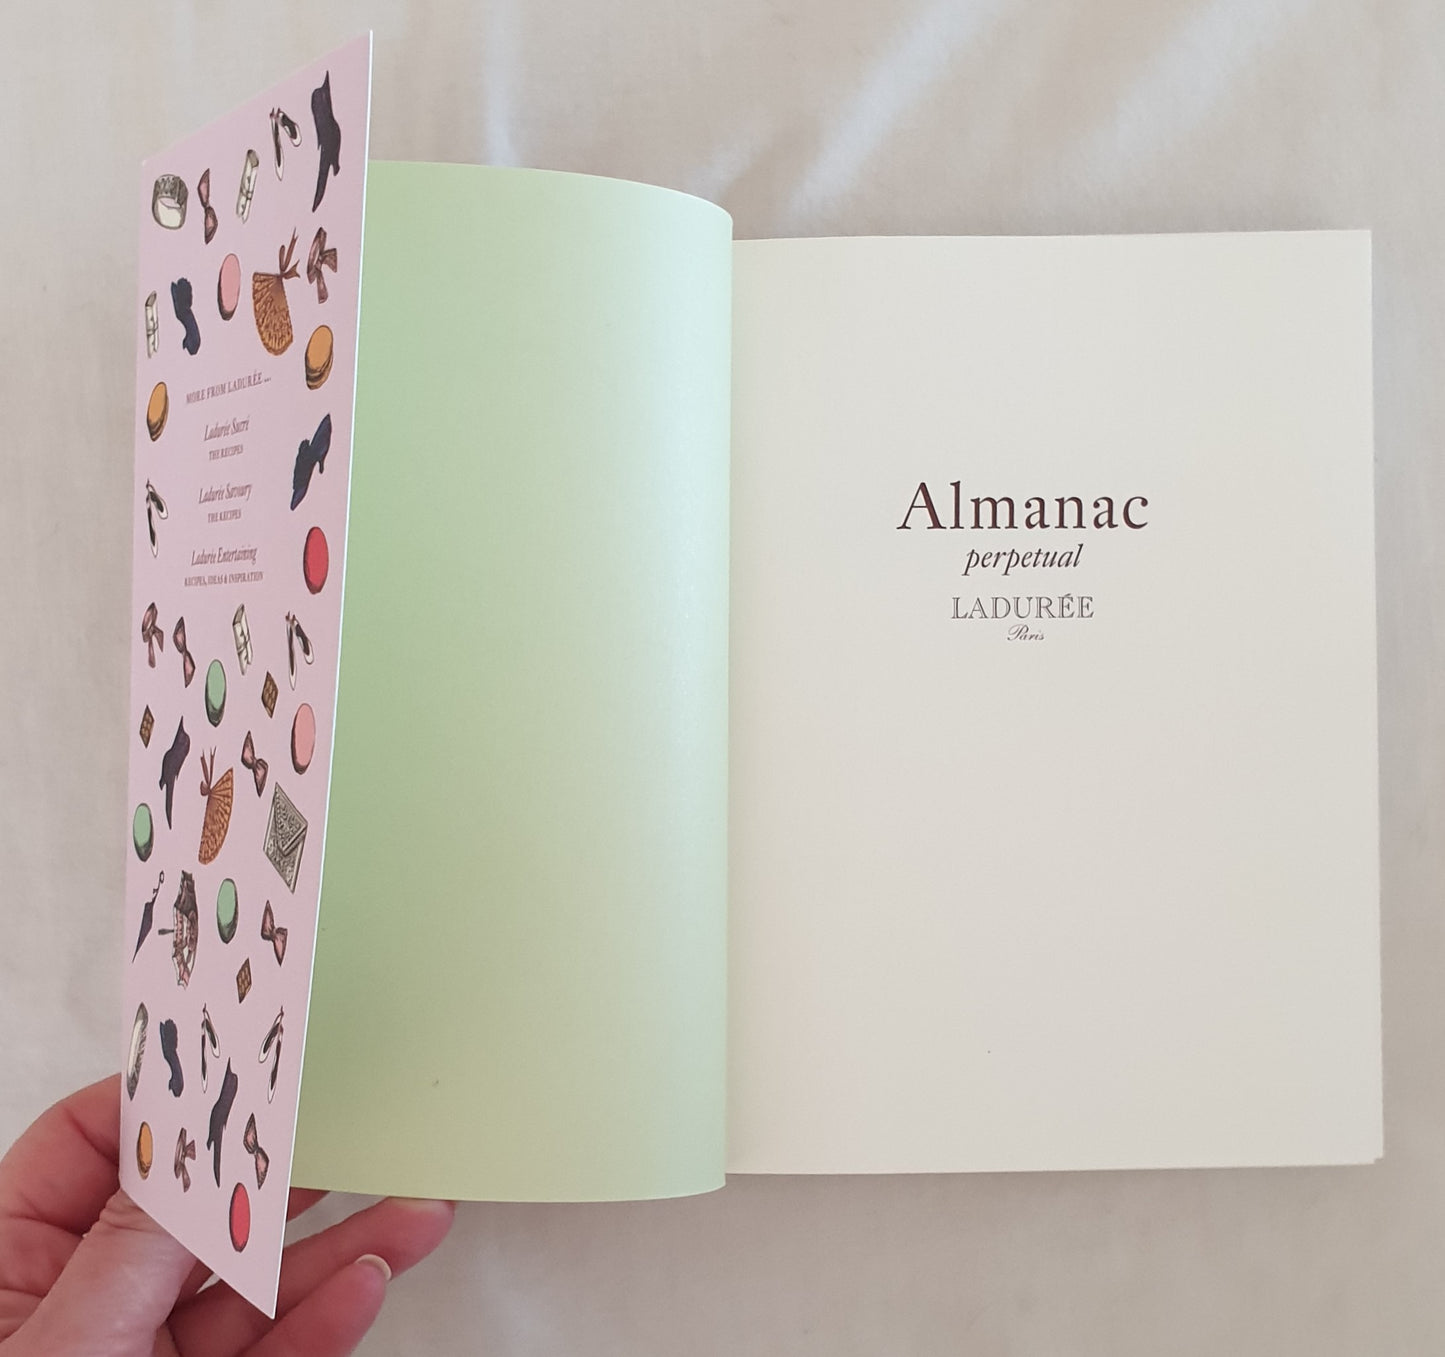 Almanac perpetual Laduree Paris by Zahia Hafs